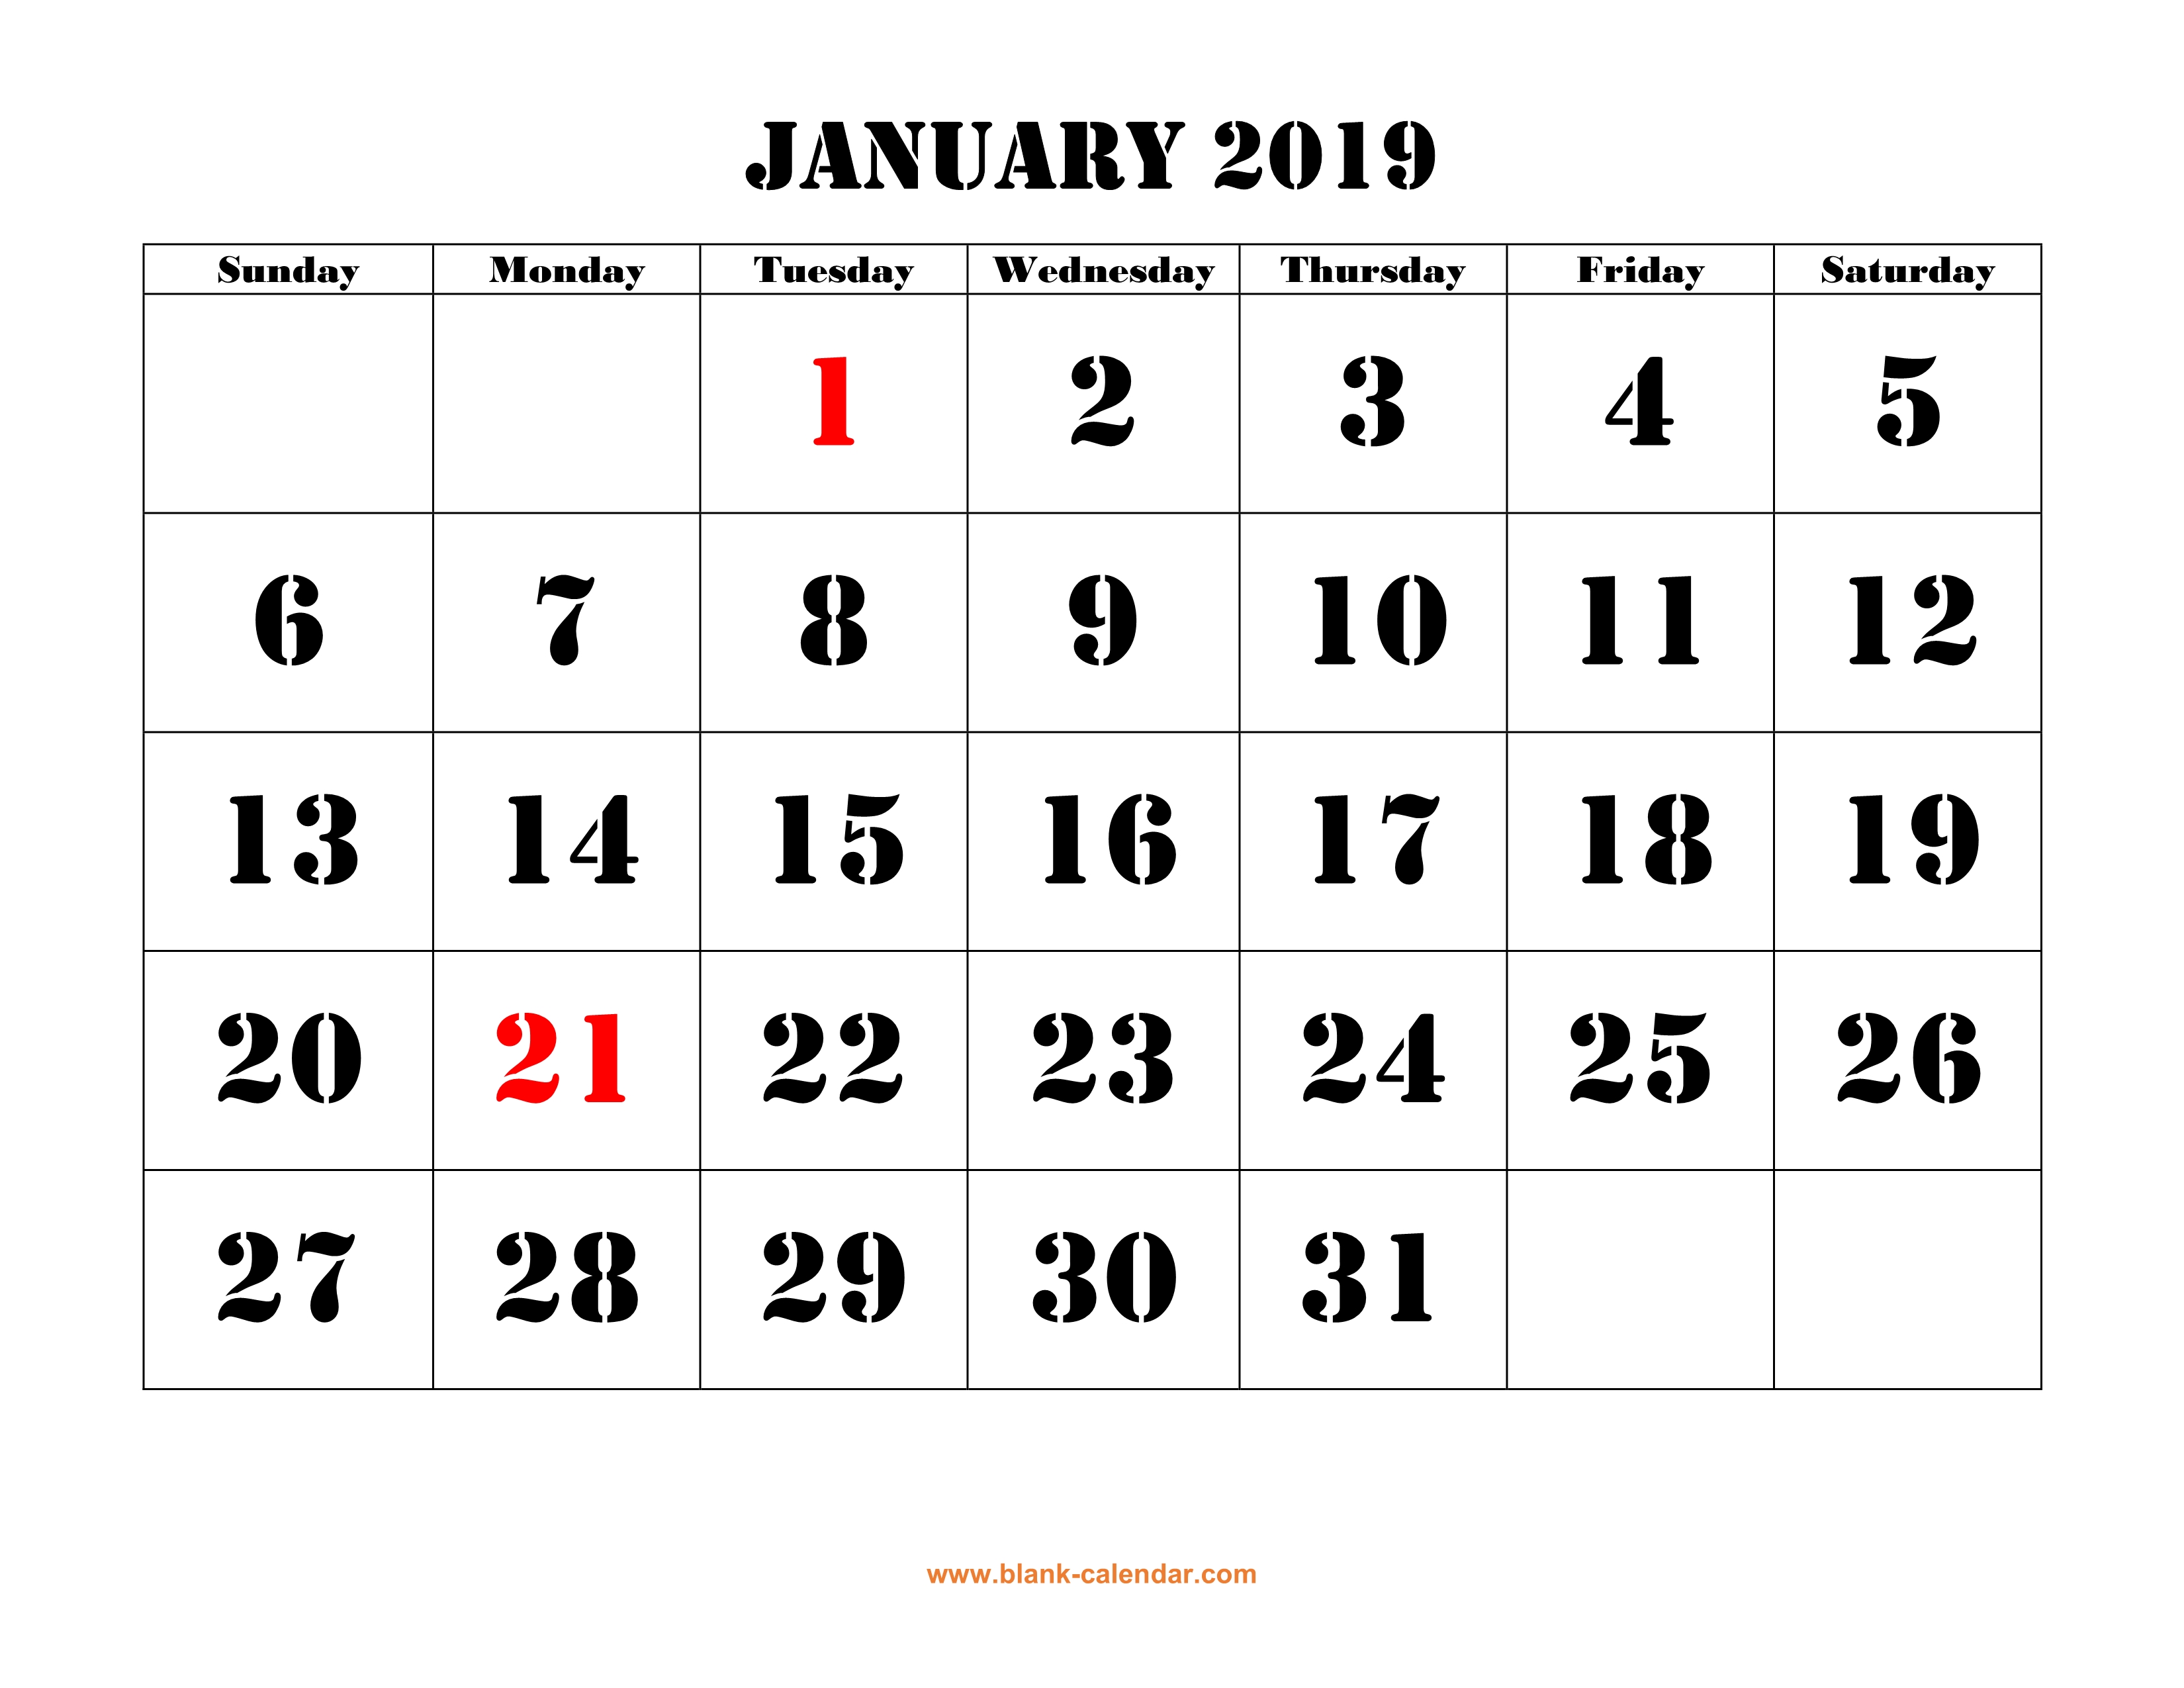 january-2019-calendar-with-holidays-bmp-u